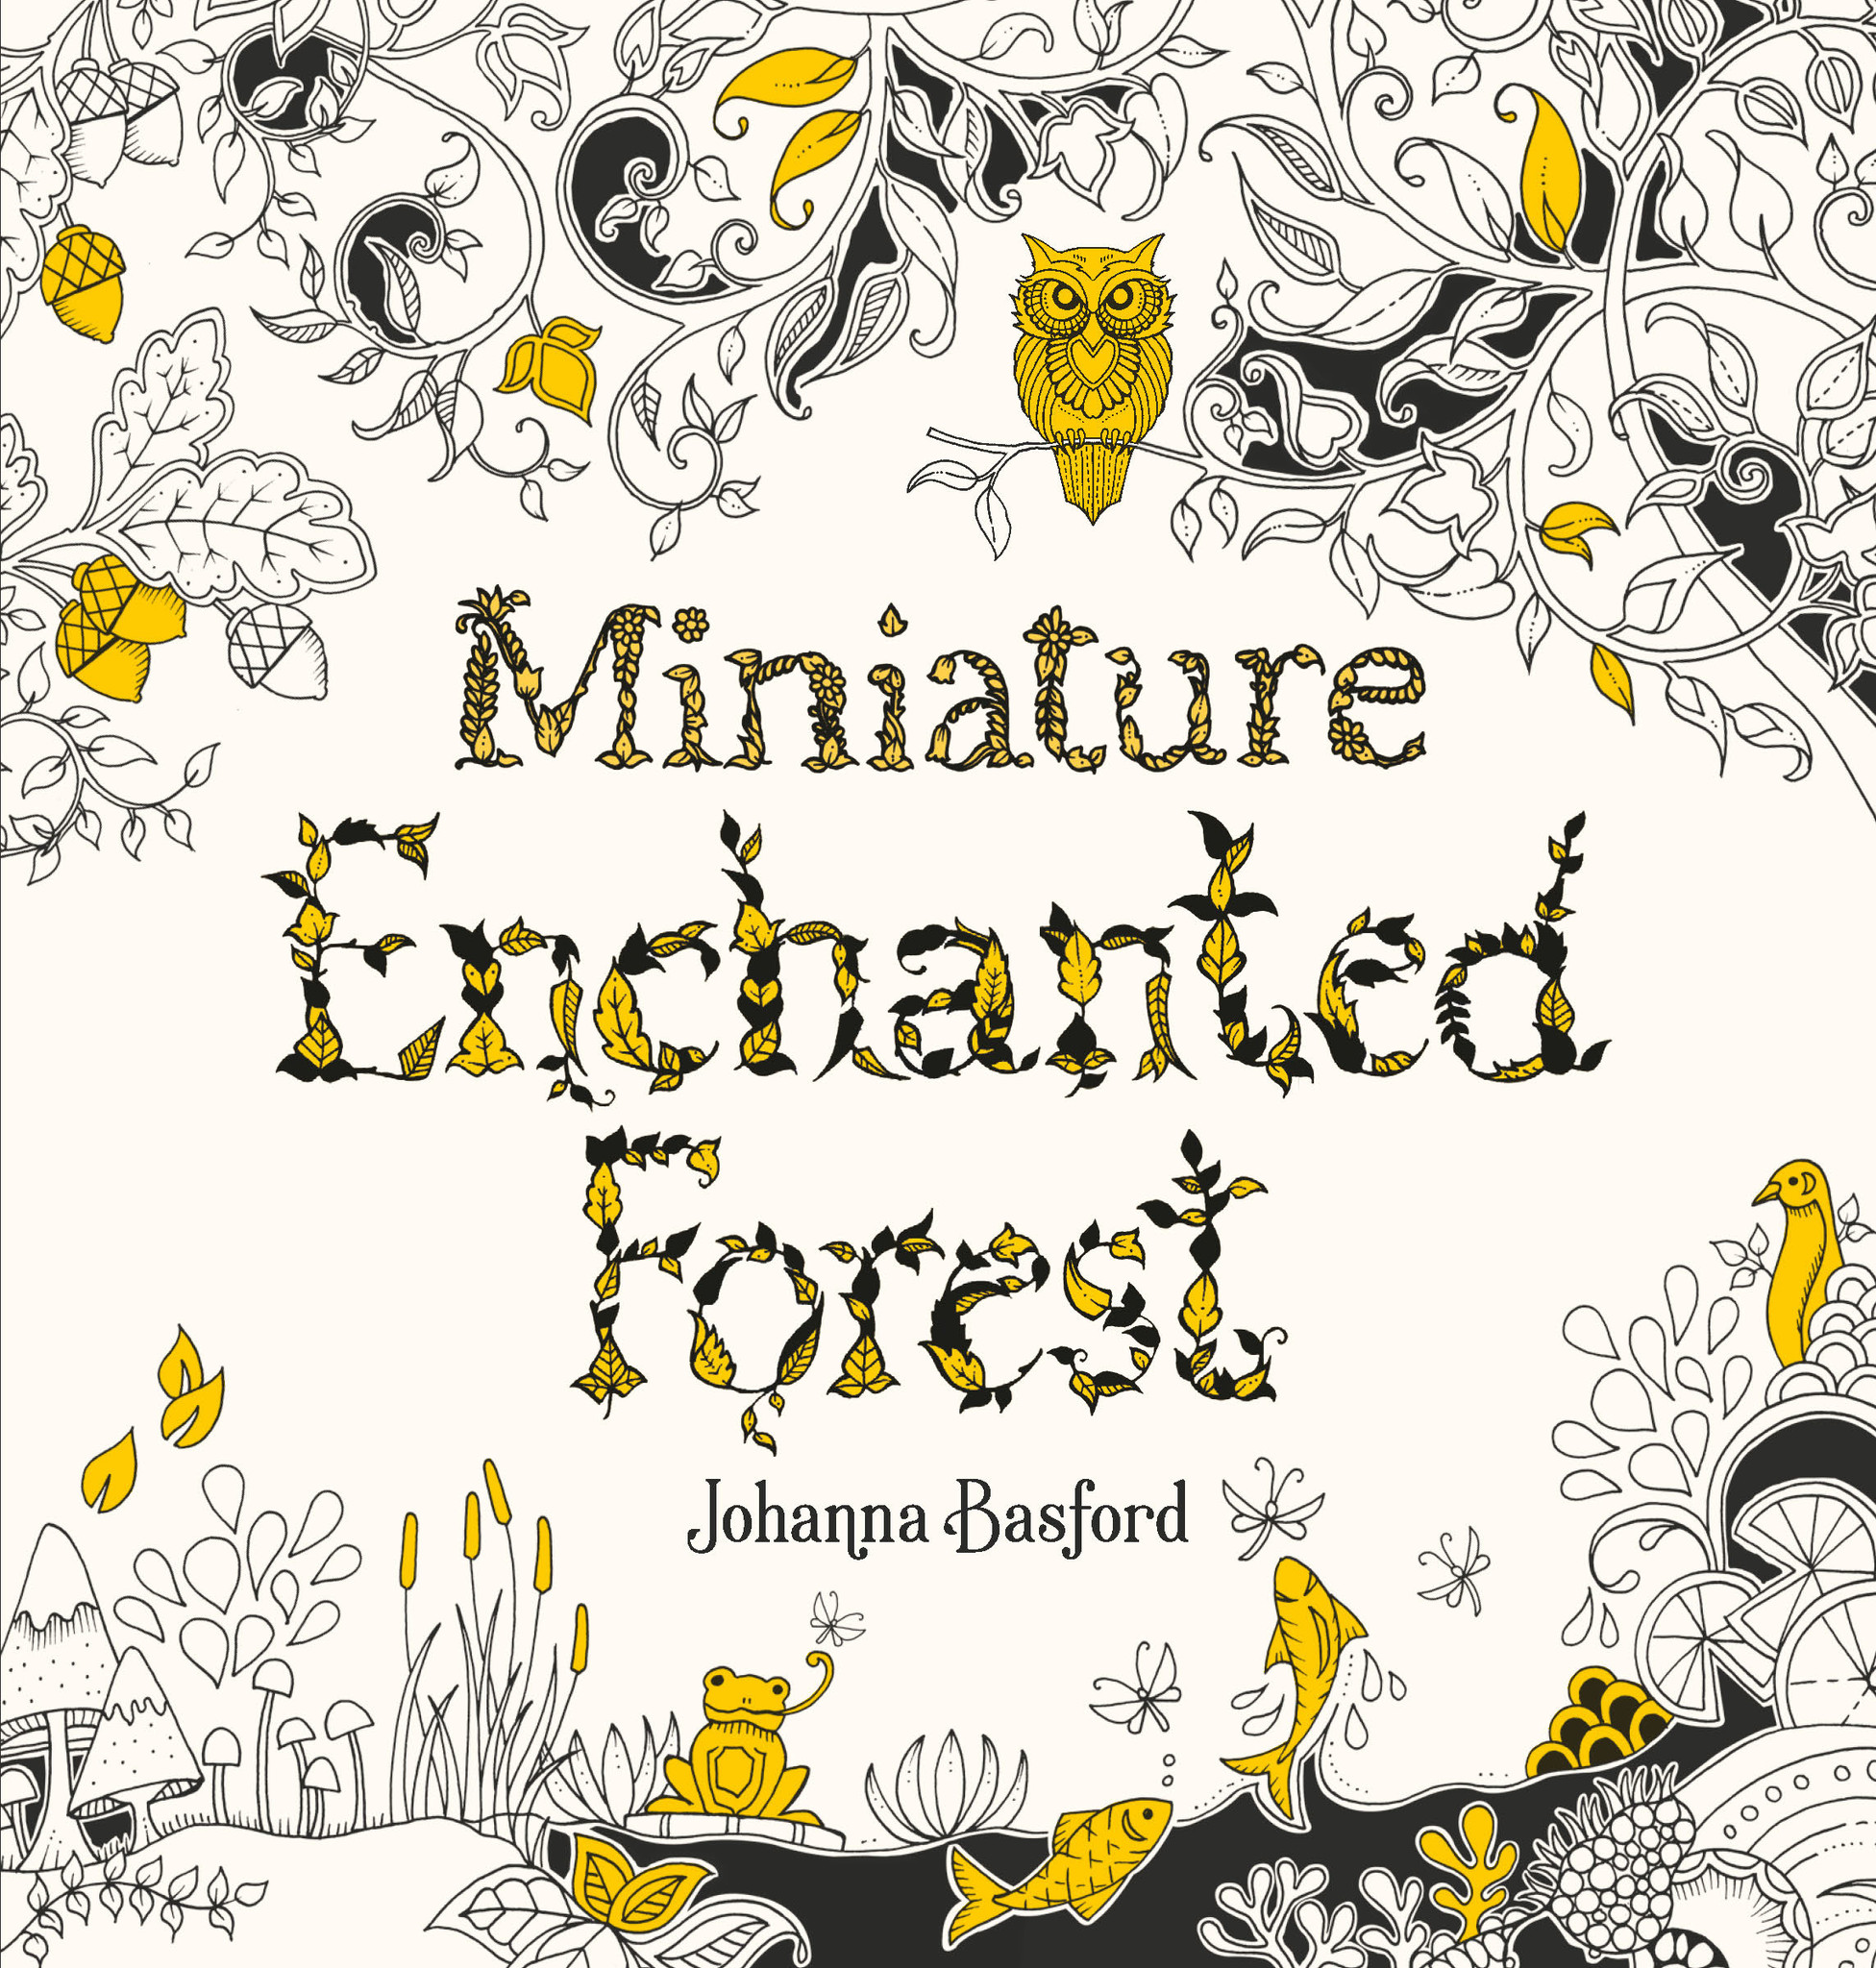 johanna-basford-miniature-enchanted-forest.jpg